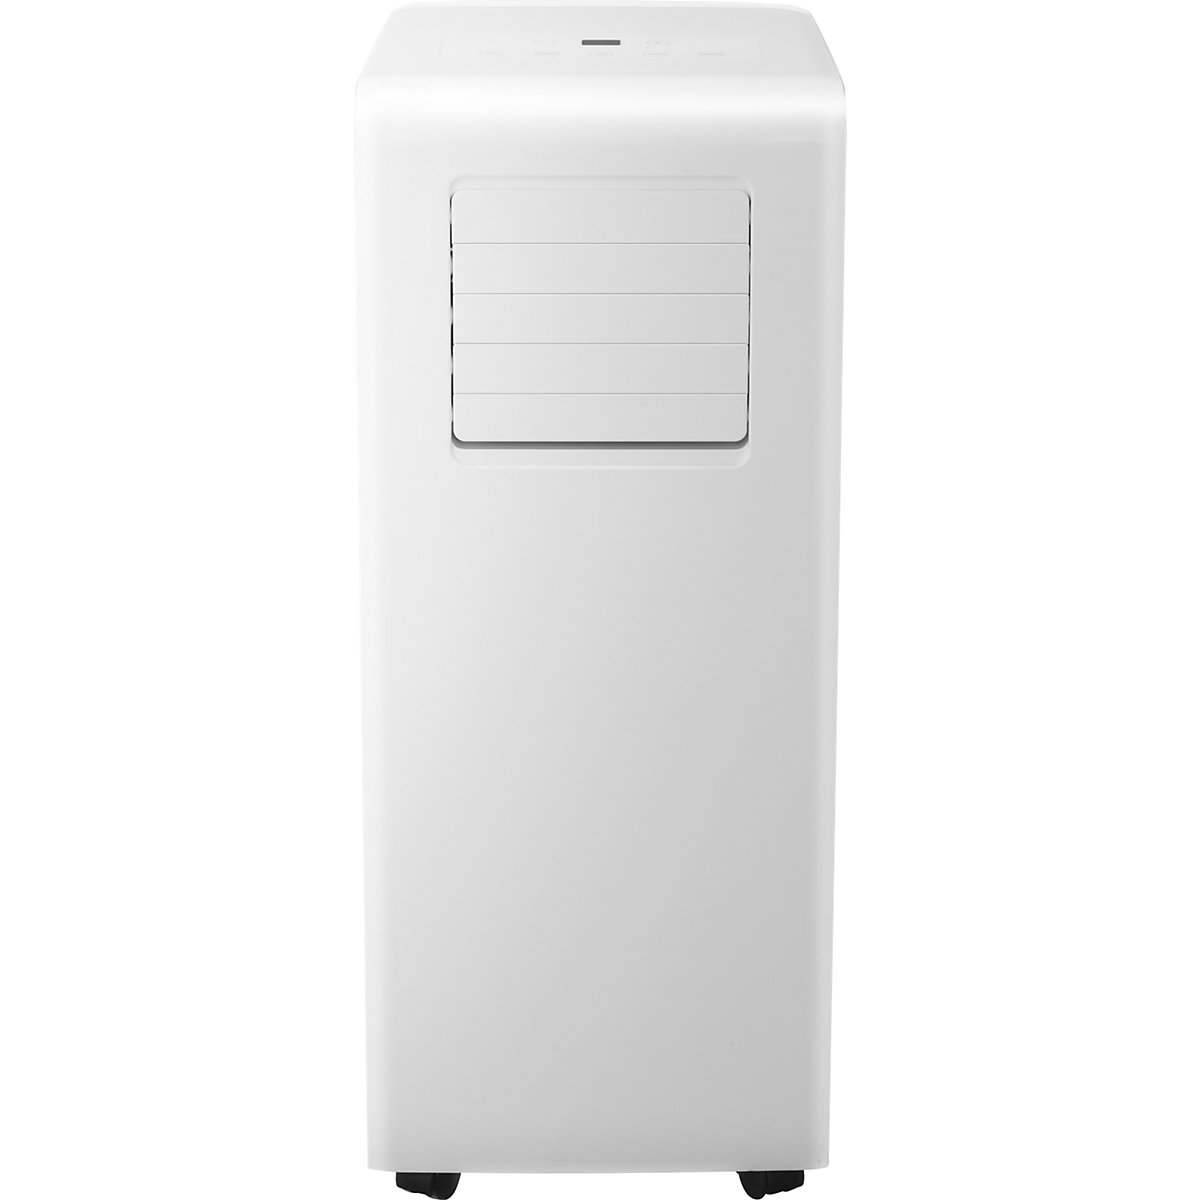 9000 BTU mobile air conditioner – GREE